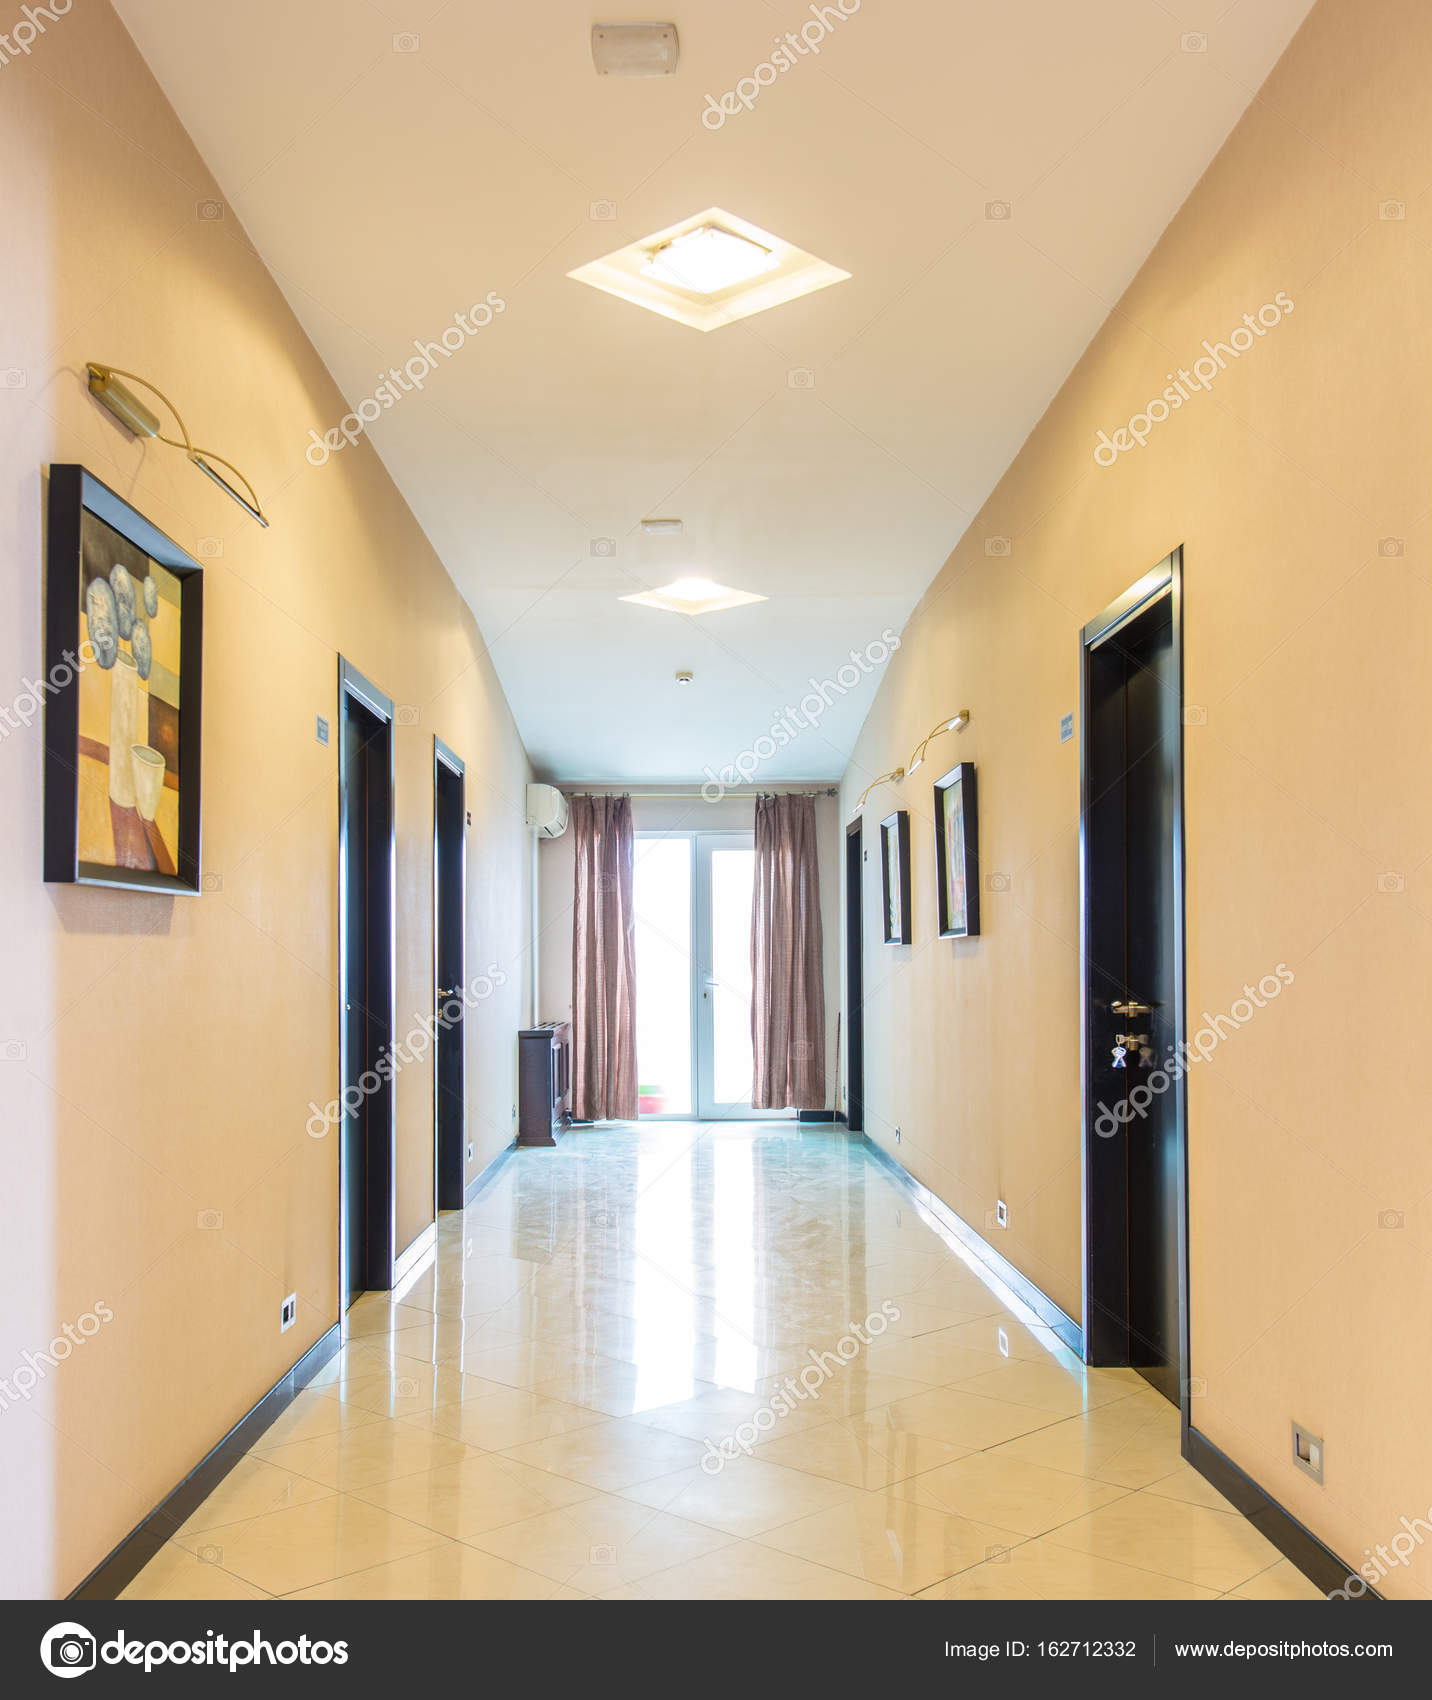 Hotel Lobby Corridor With Modern Design Stock Photo